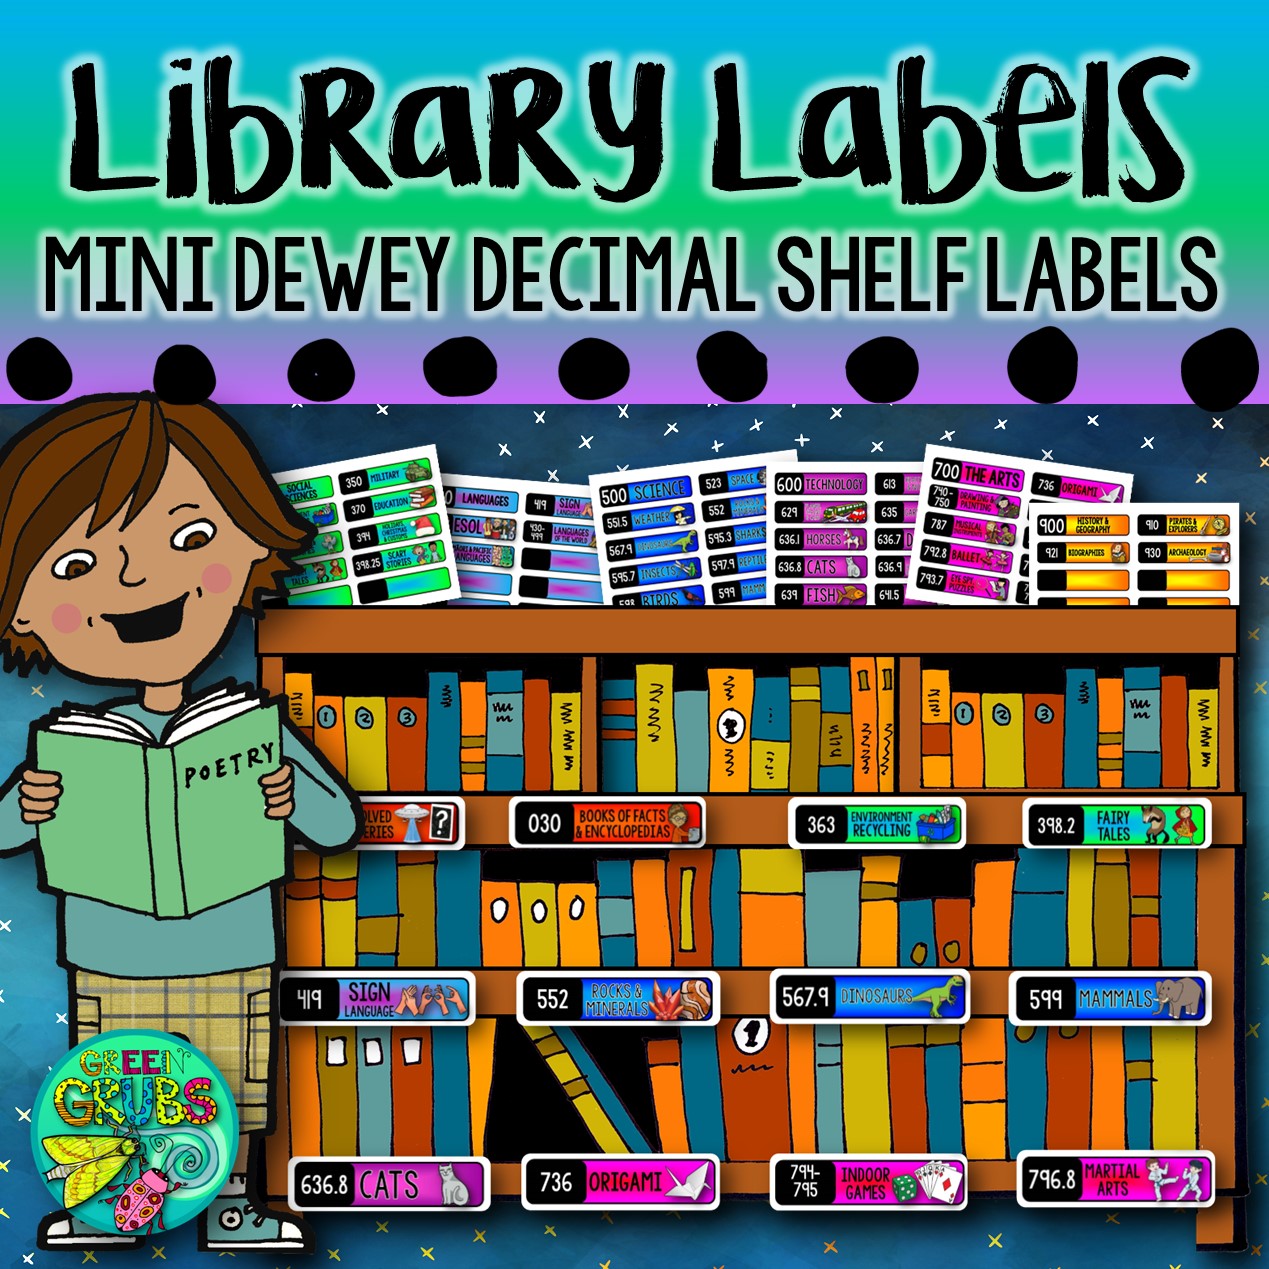 dewey-decimal-system-labels-mini-shelf-labels